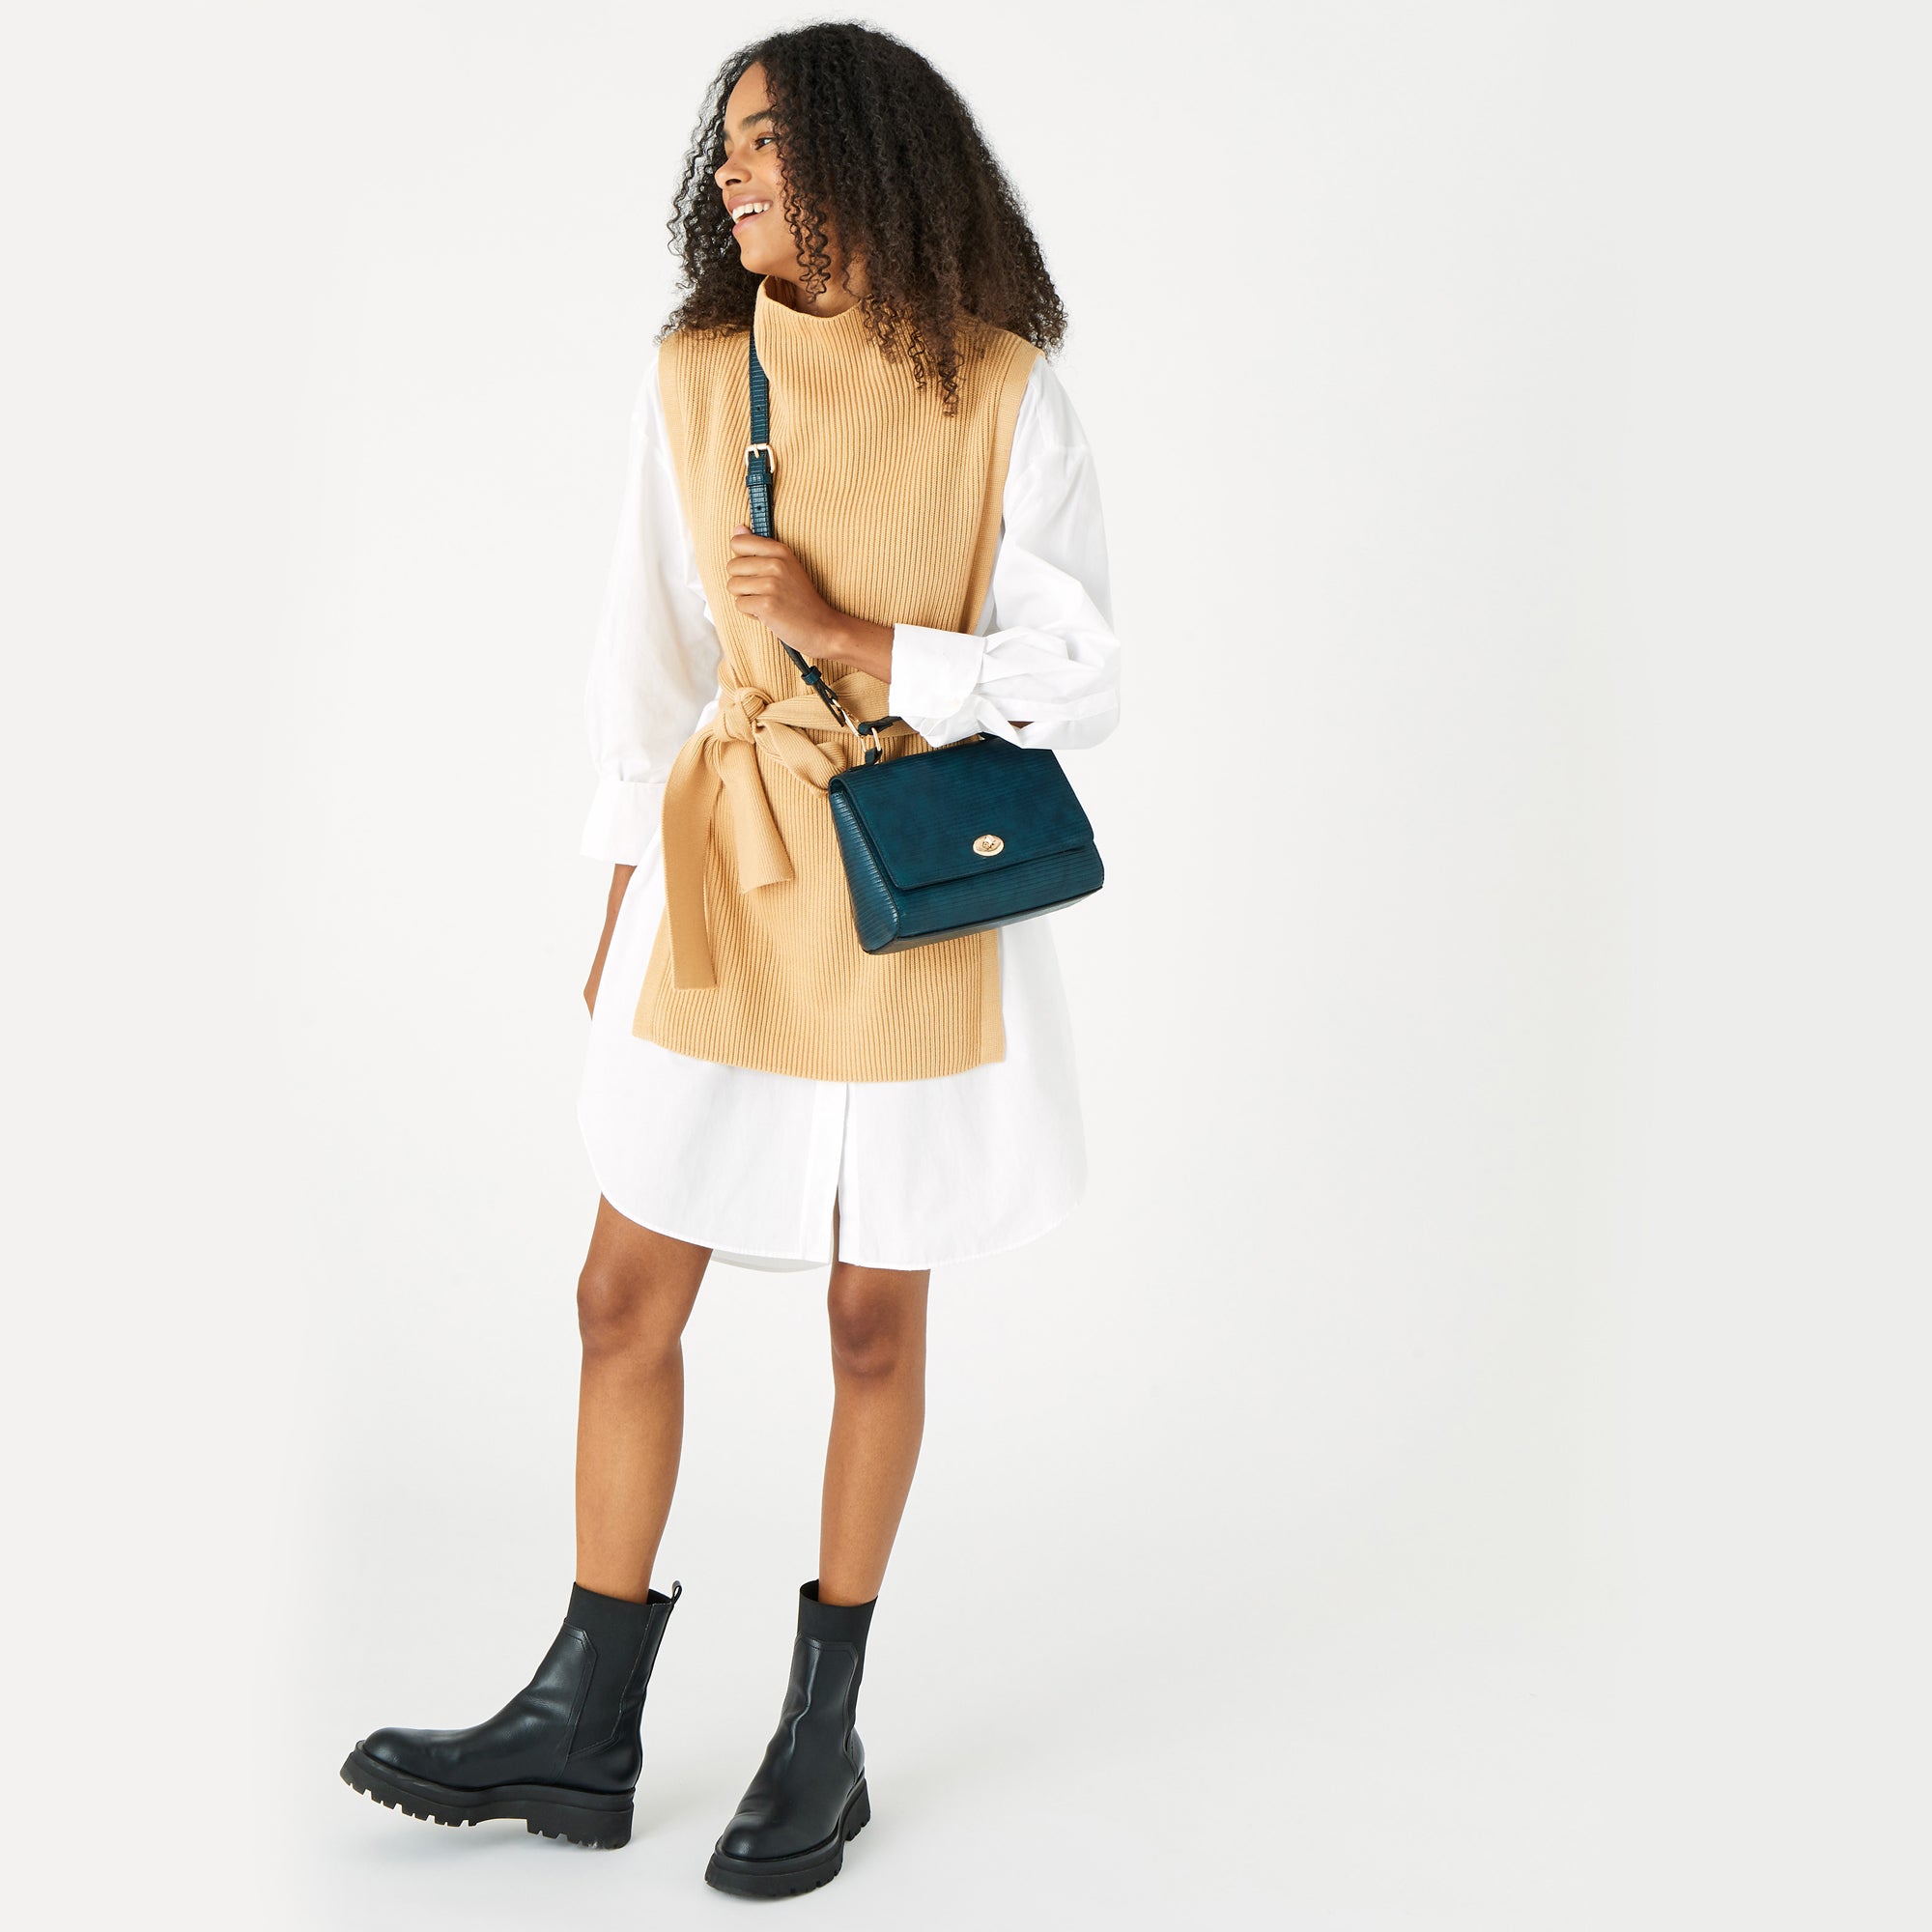 Accessorize London Women's Jessica Croc Bag - Teal